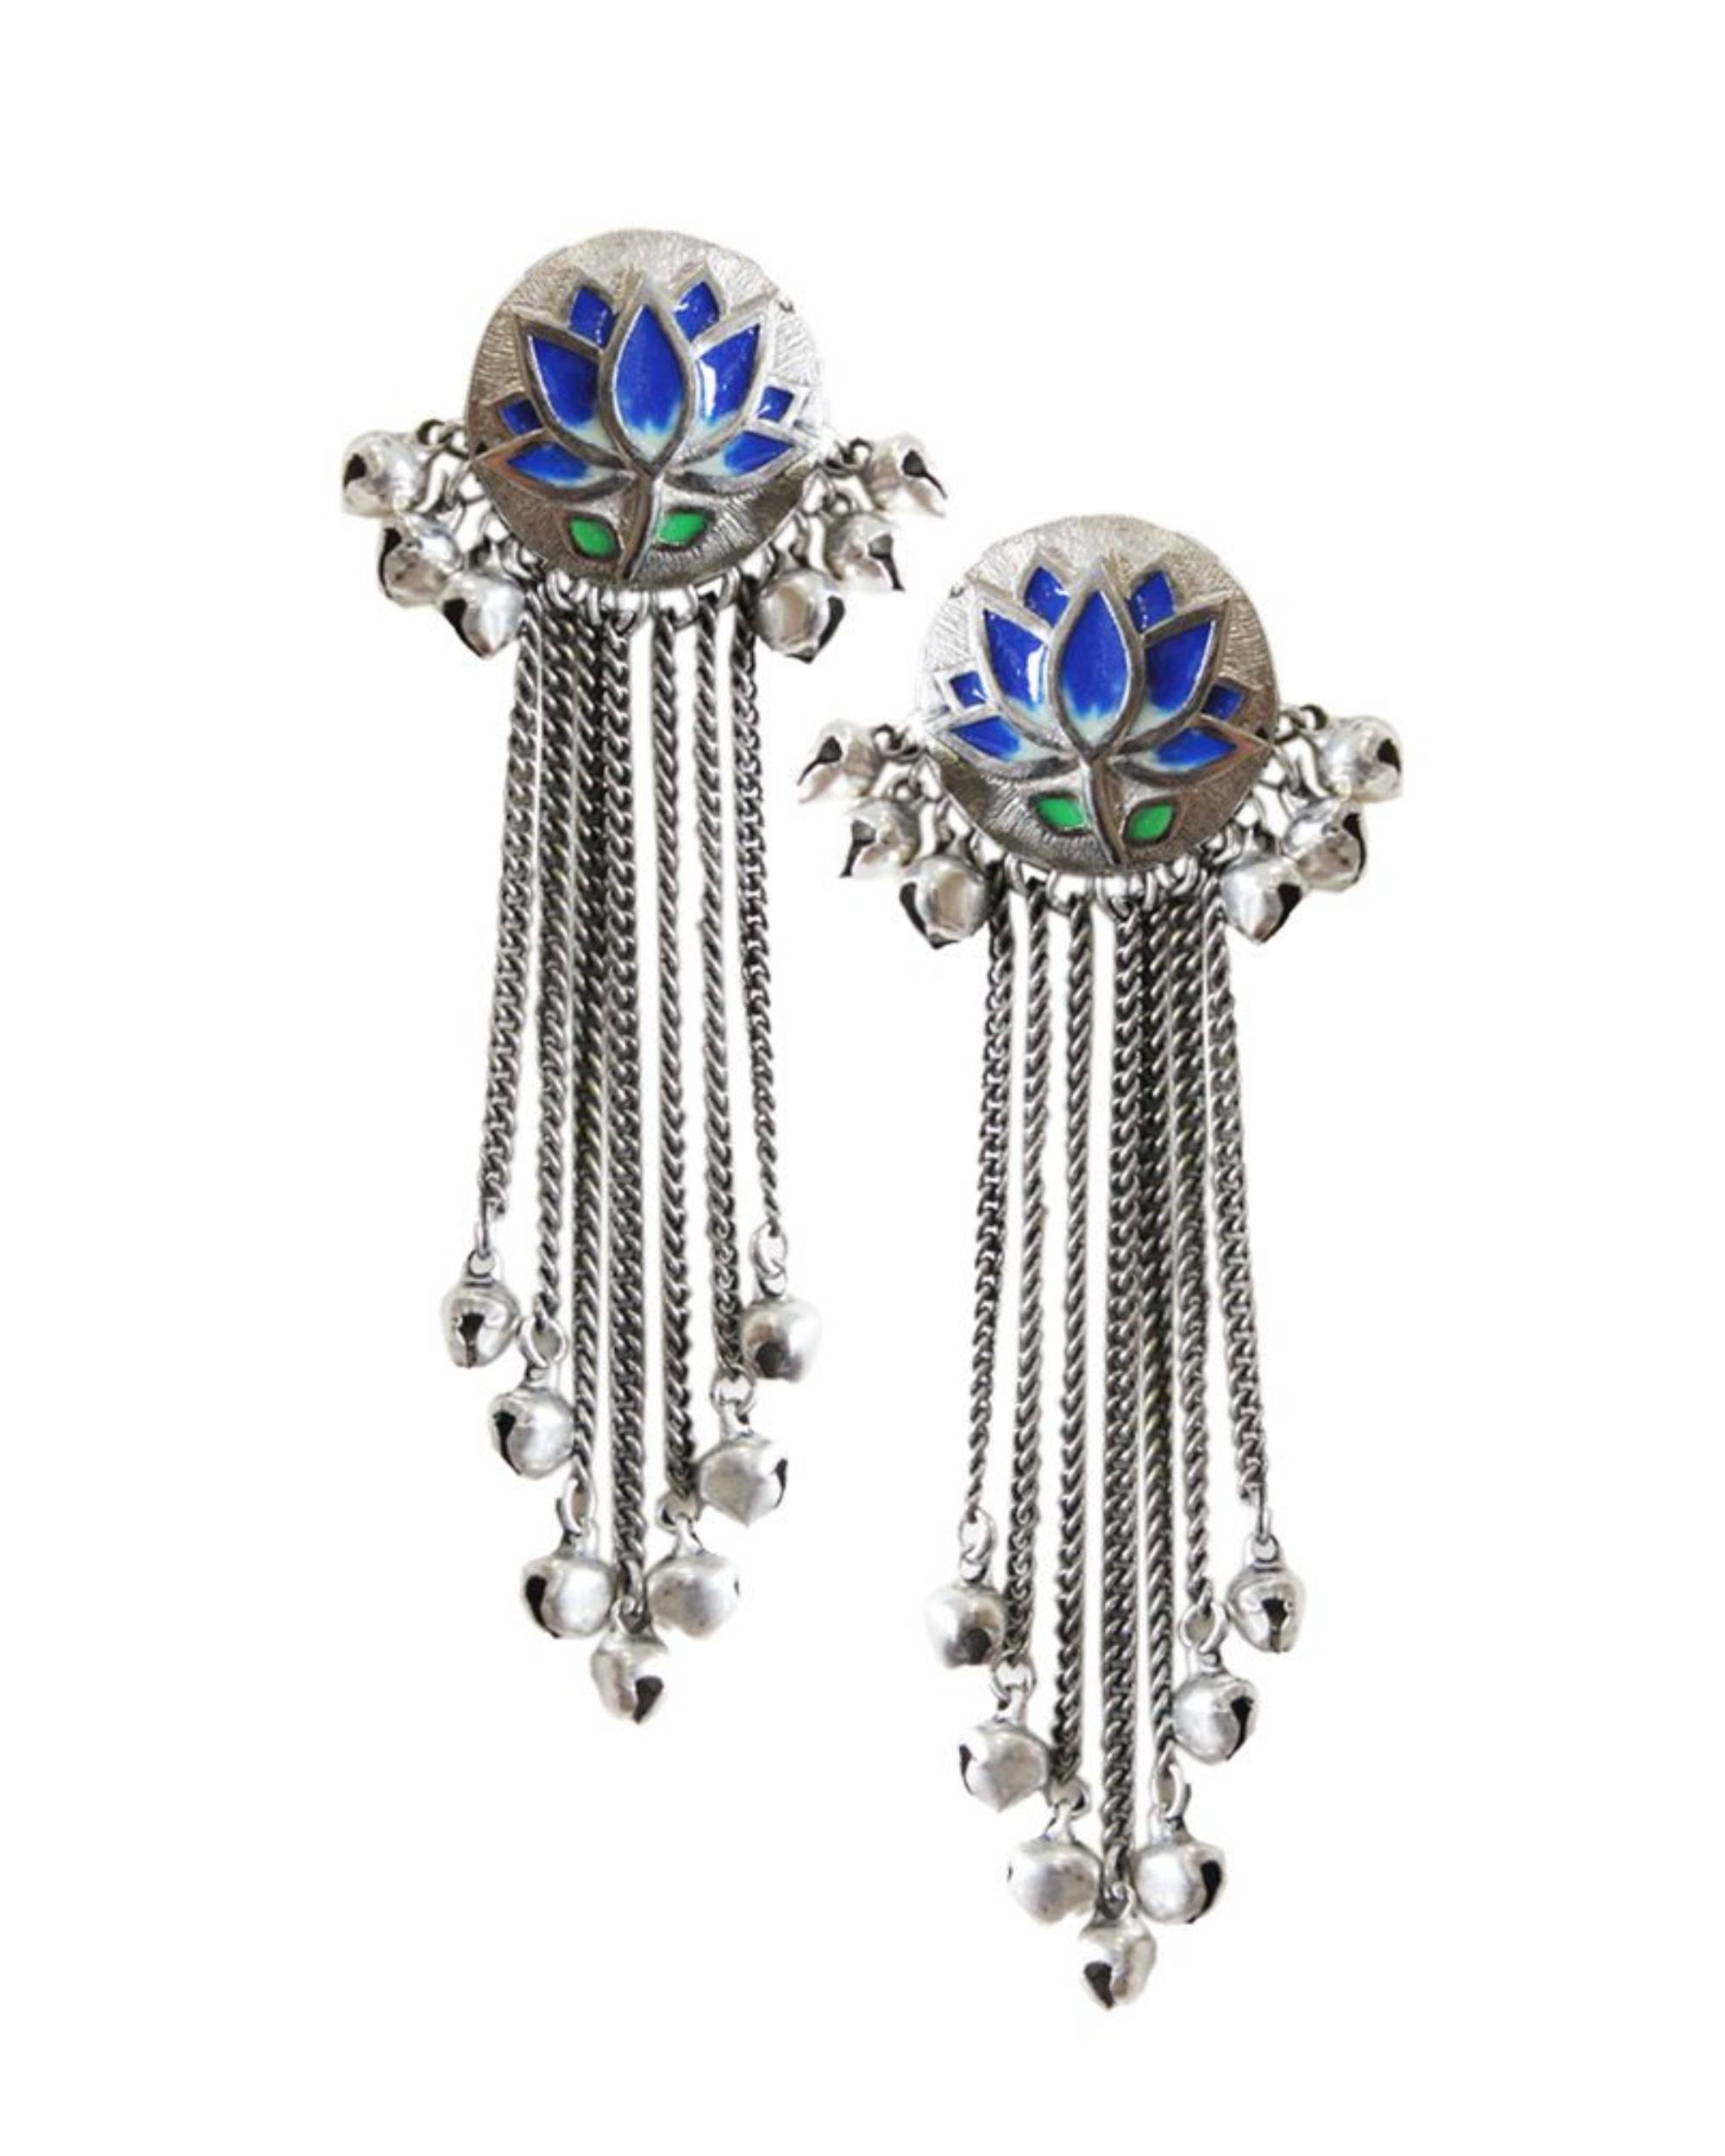 Blue enamel lotus earrings with tassels